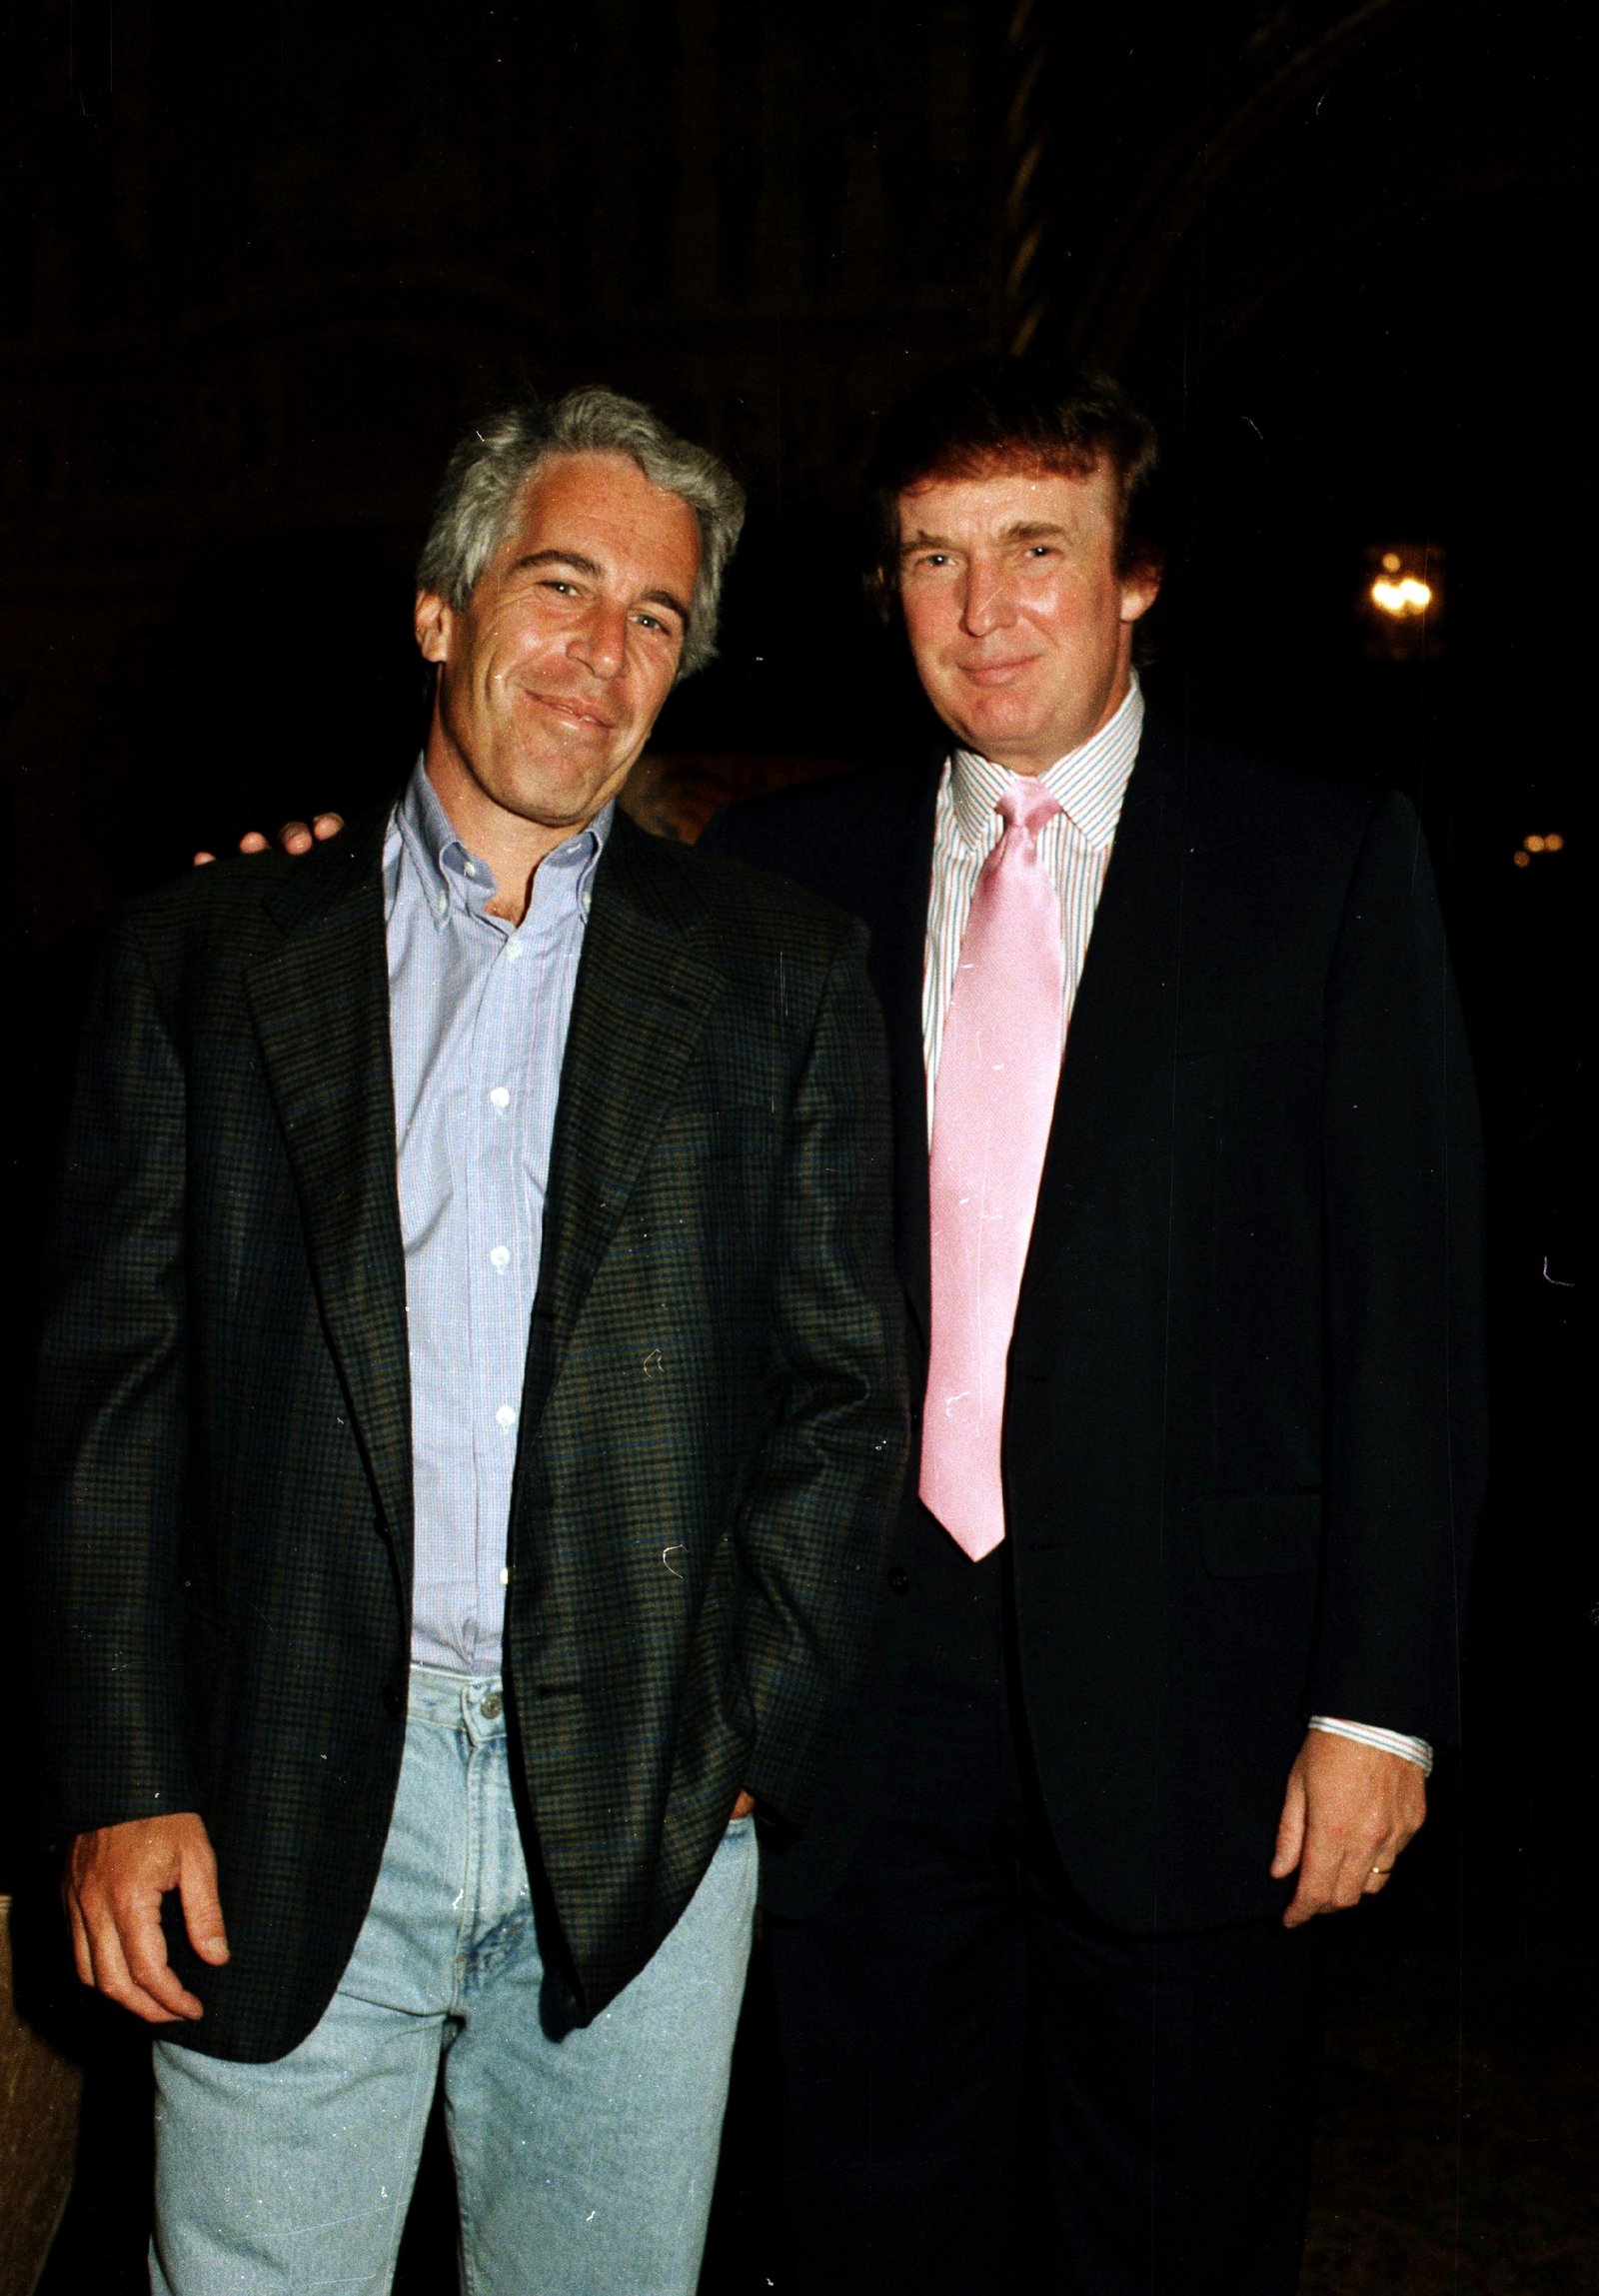 Джеффрі Епштейн та Дональд Трамп, 2000 рік. Фото: Getty Images